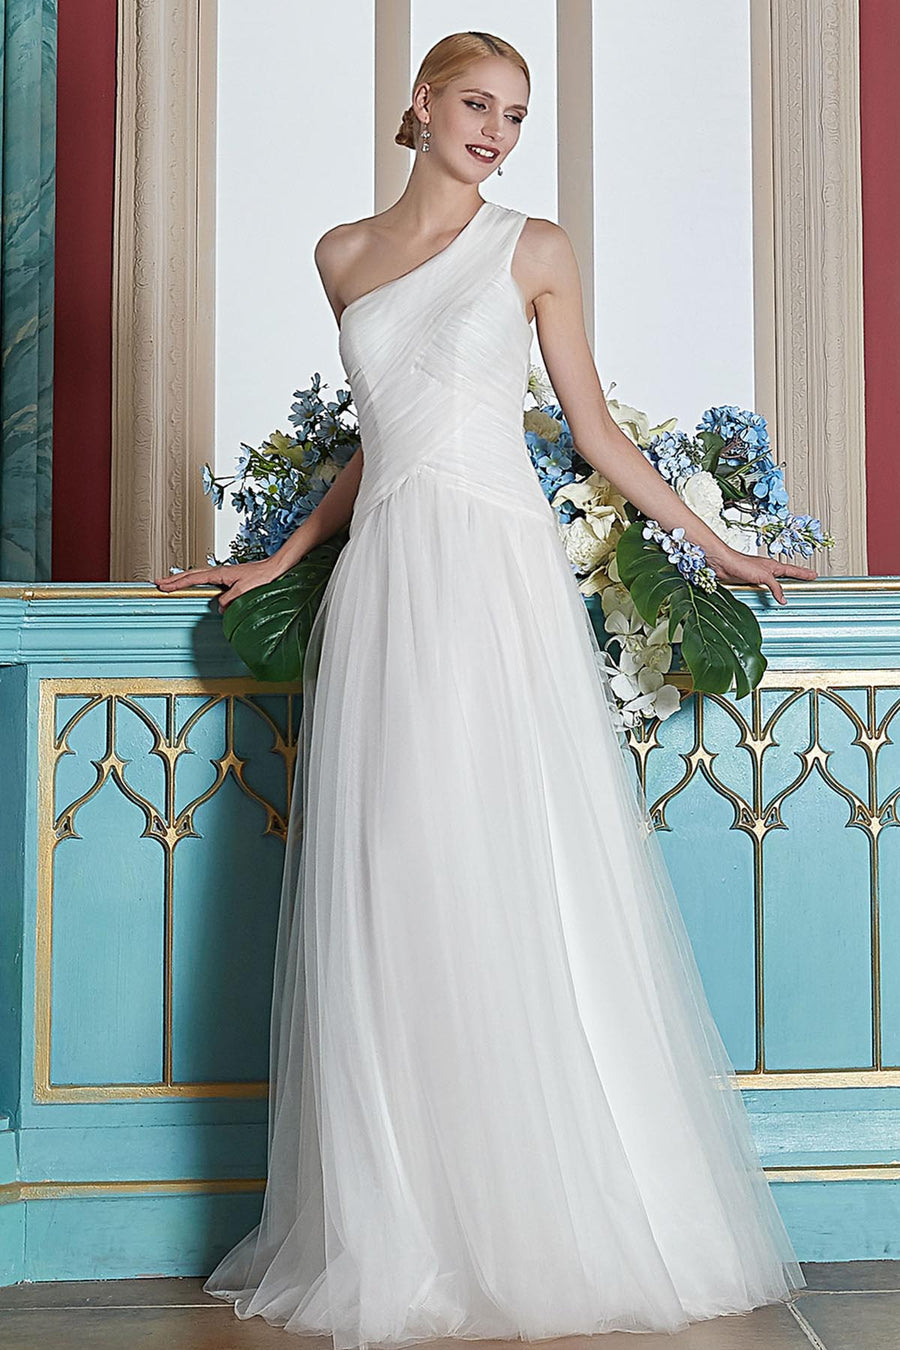 A-Line Floor-length One Shoulder Long Tulle Bridesmaid dresses